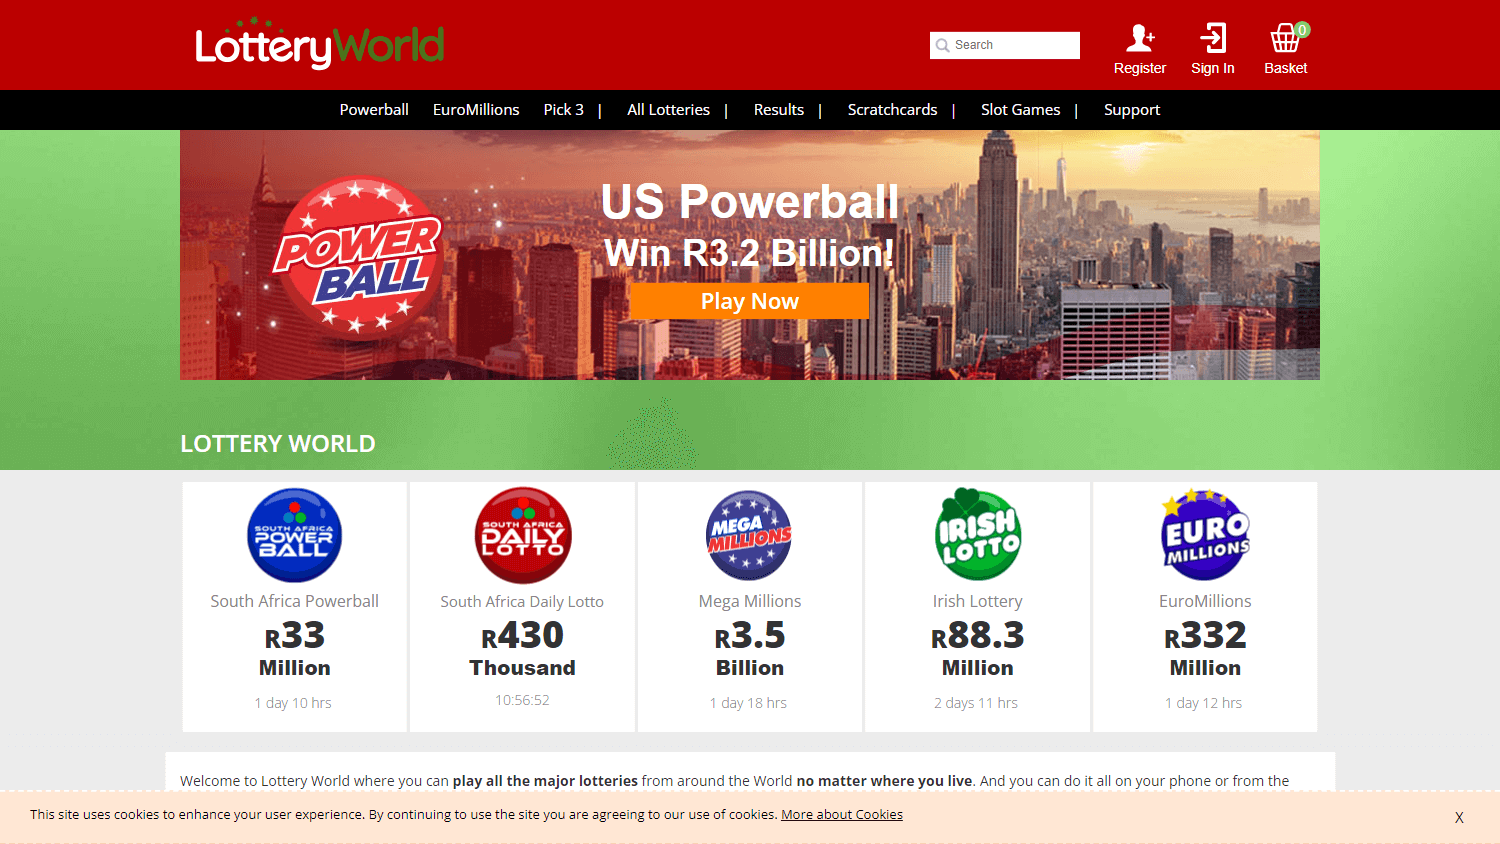 lotteryworld_casino_za_homepage_desktop